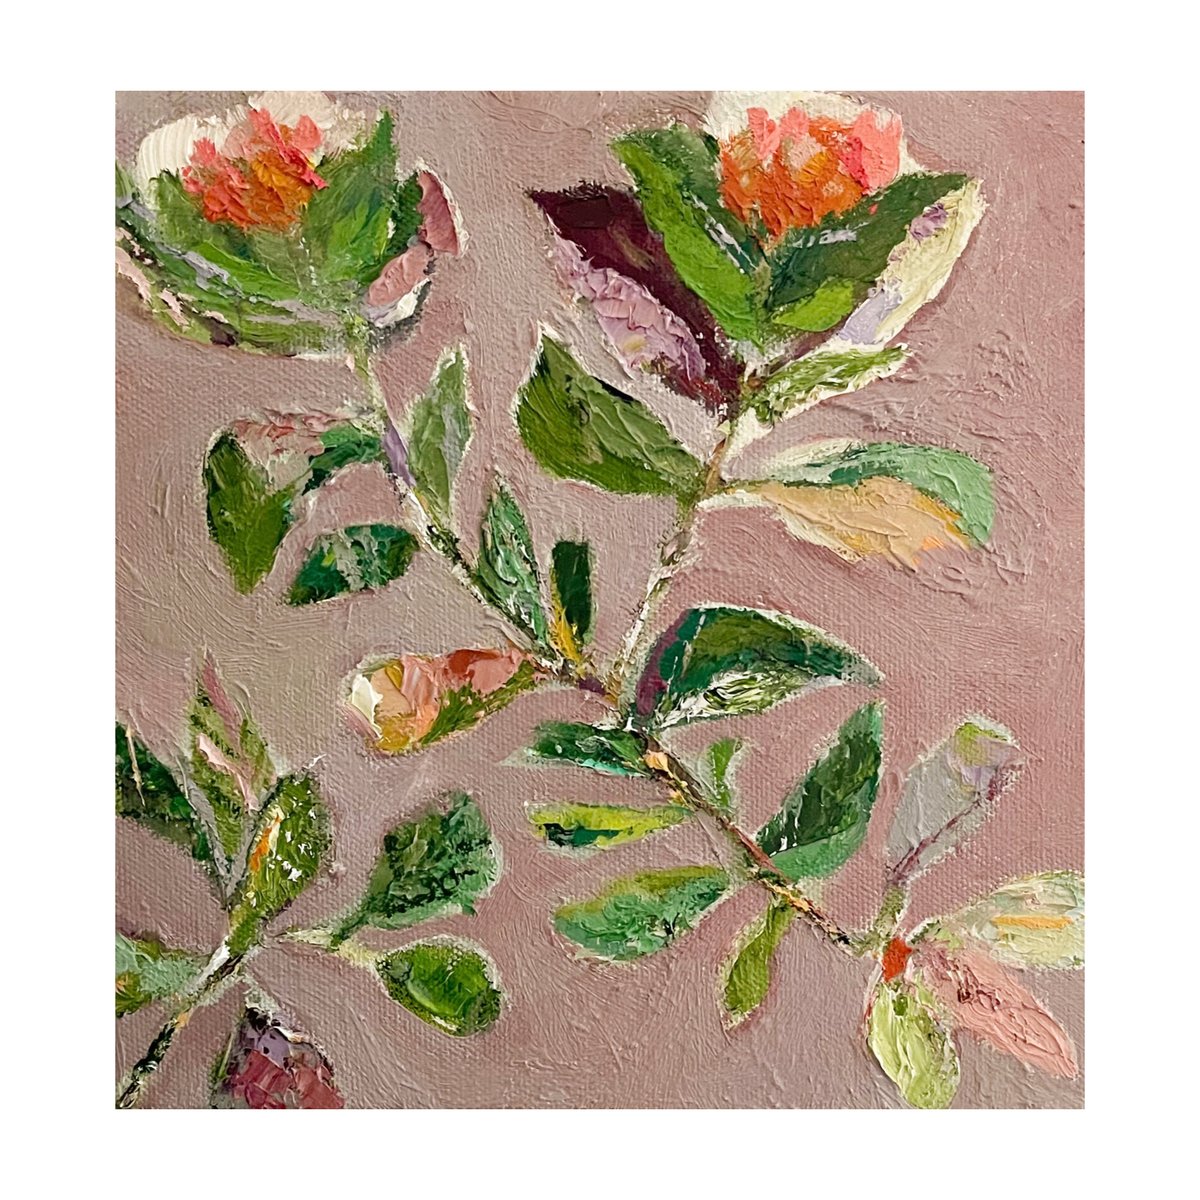 Image of ‘Botanique’ 2021 Oil on canvas